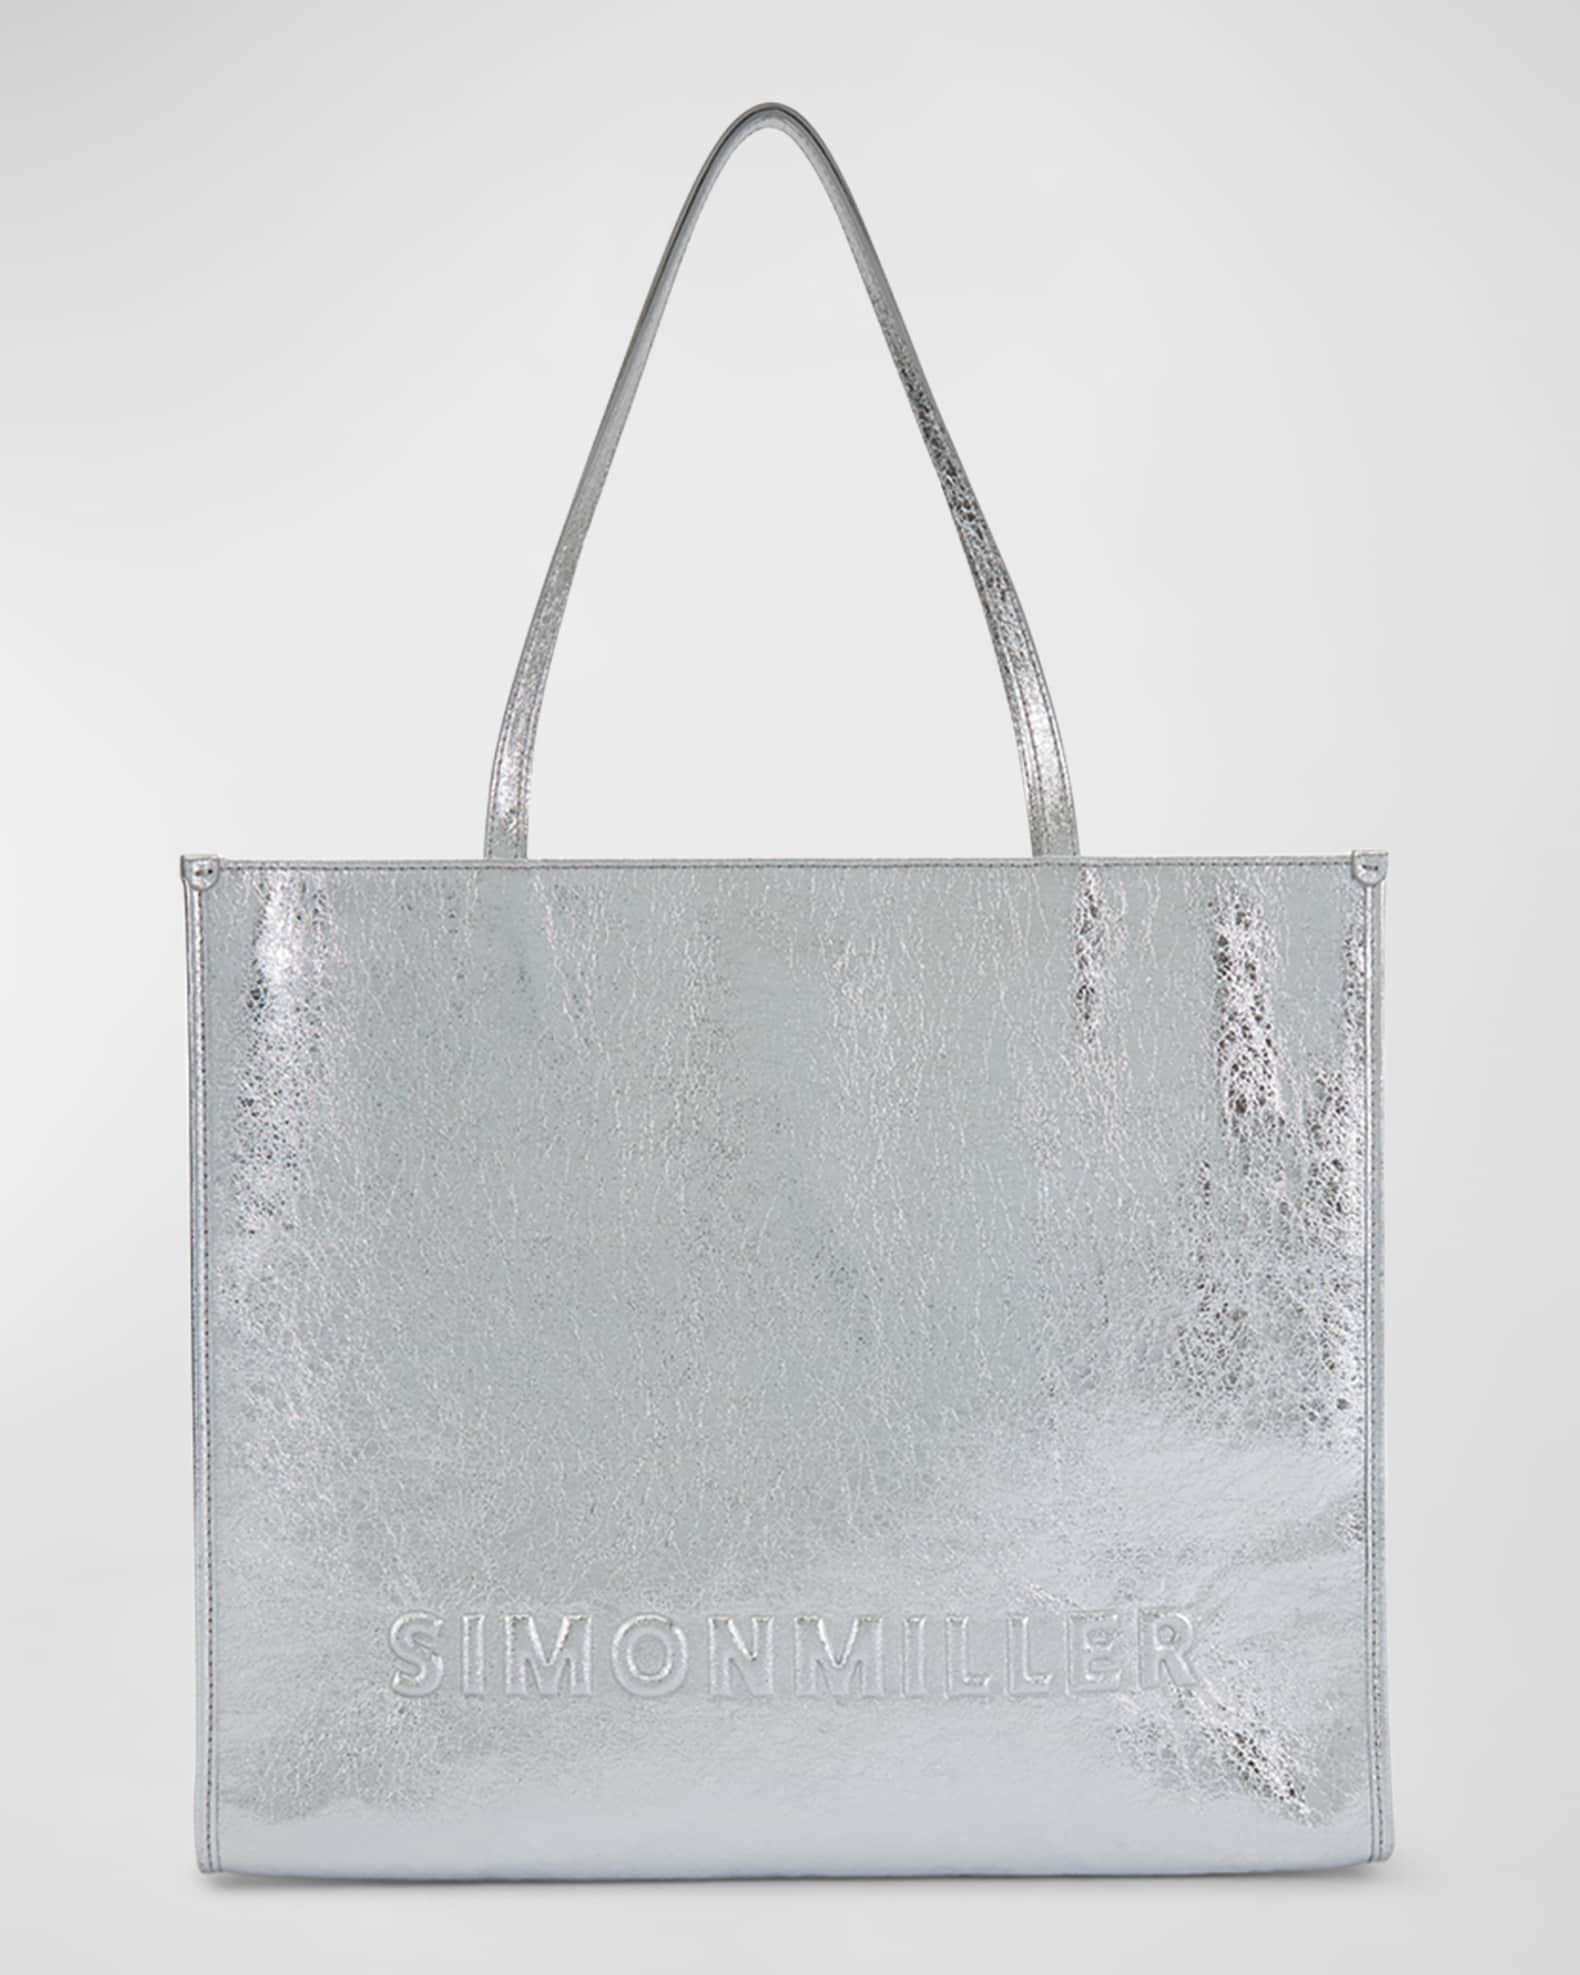 Neiman Marcus Womens Large Beach Tote Purse Bag White with Handheld Bag Too